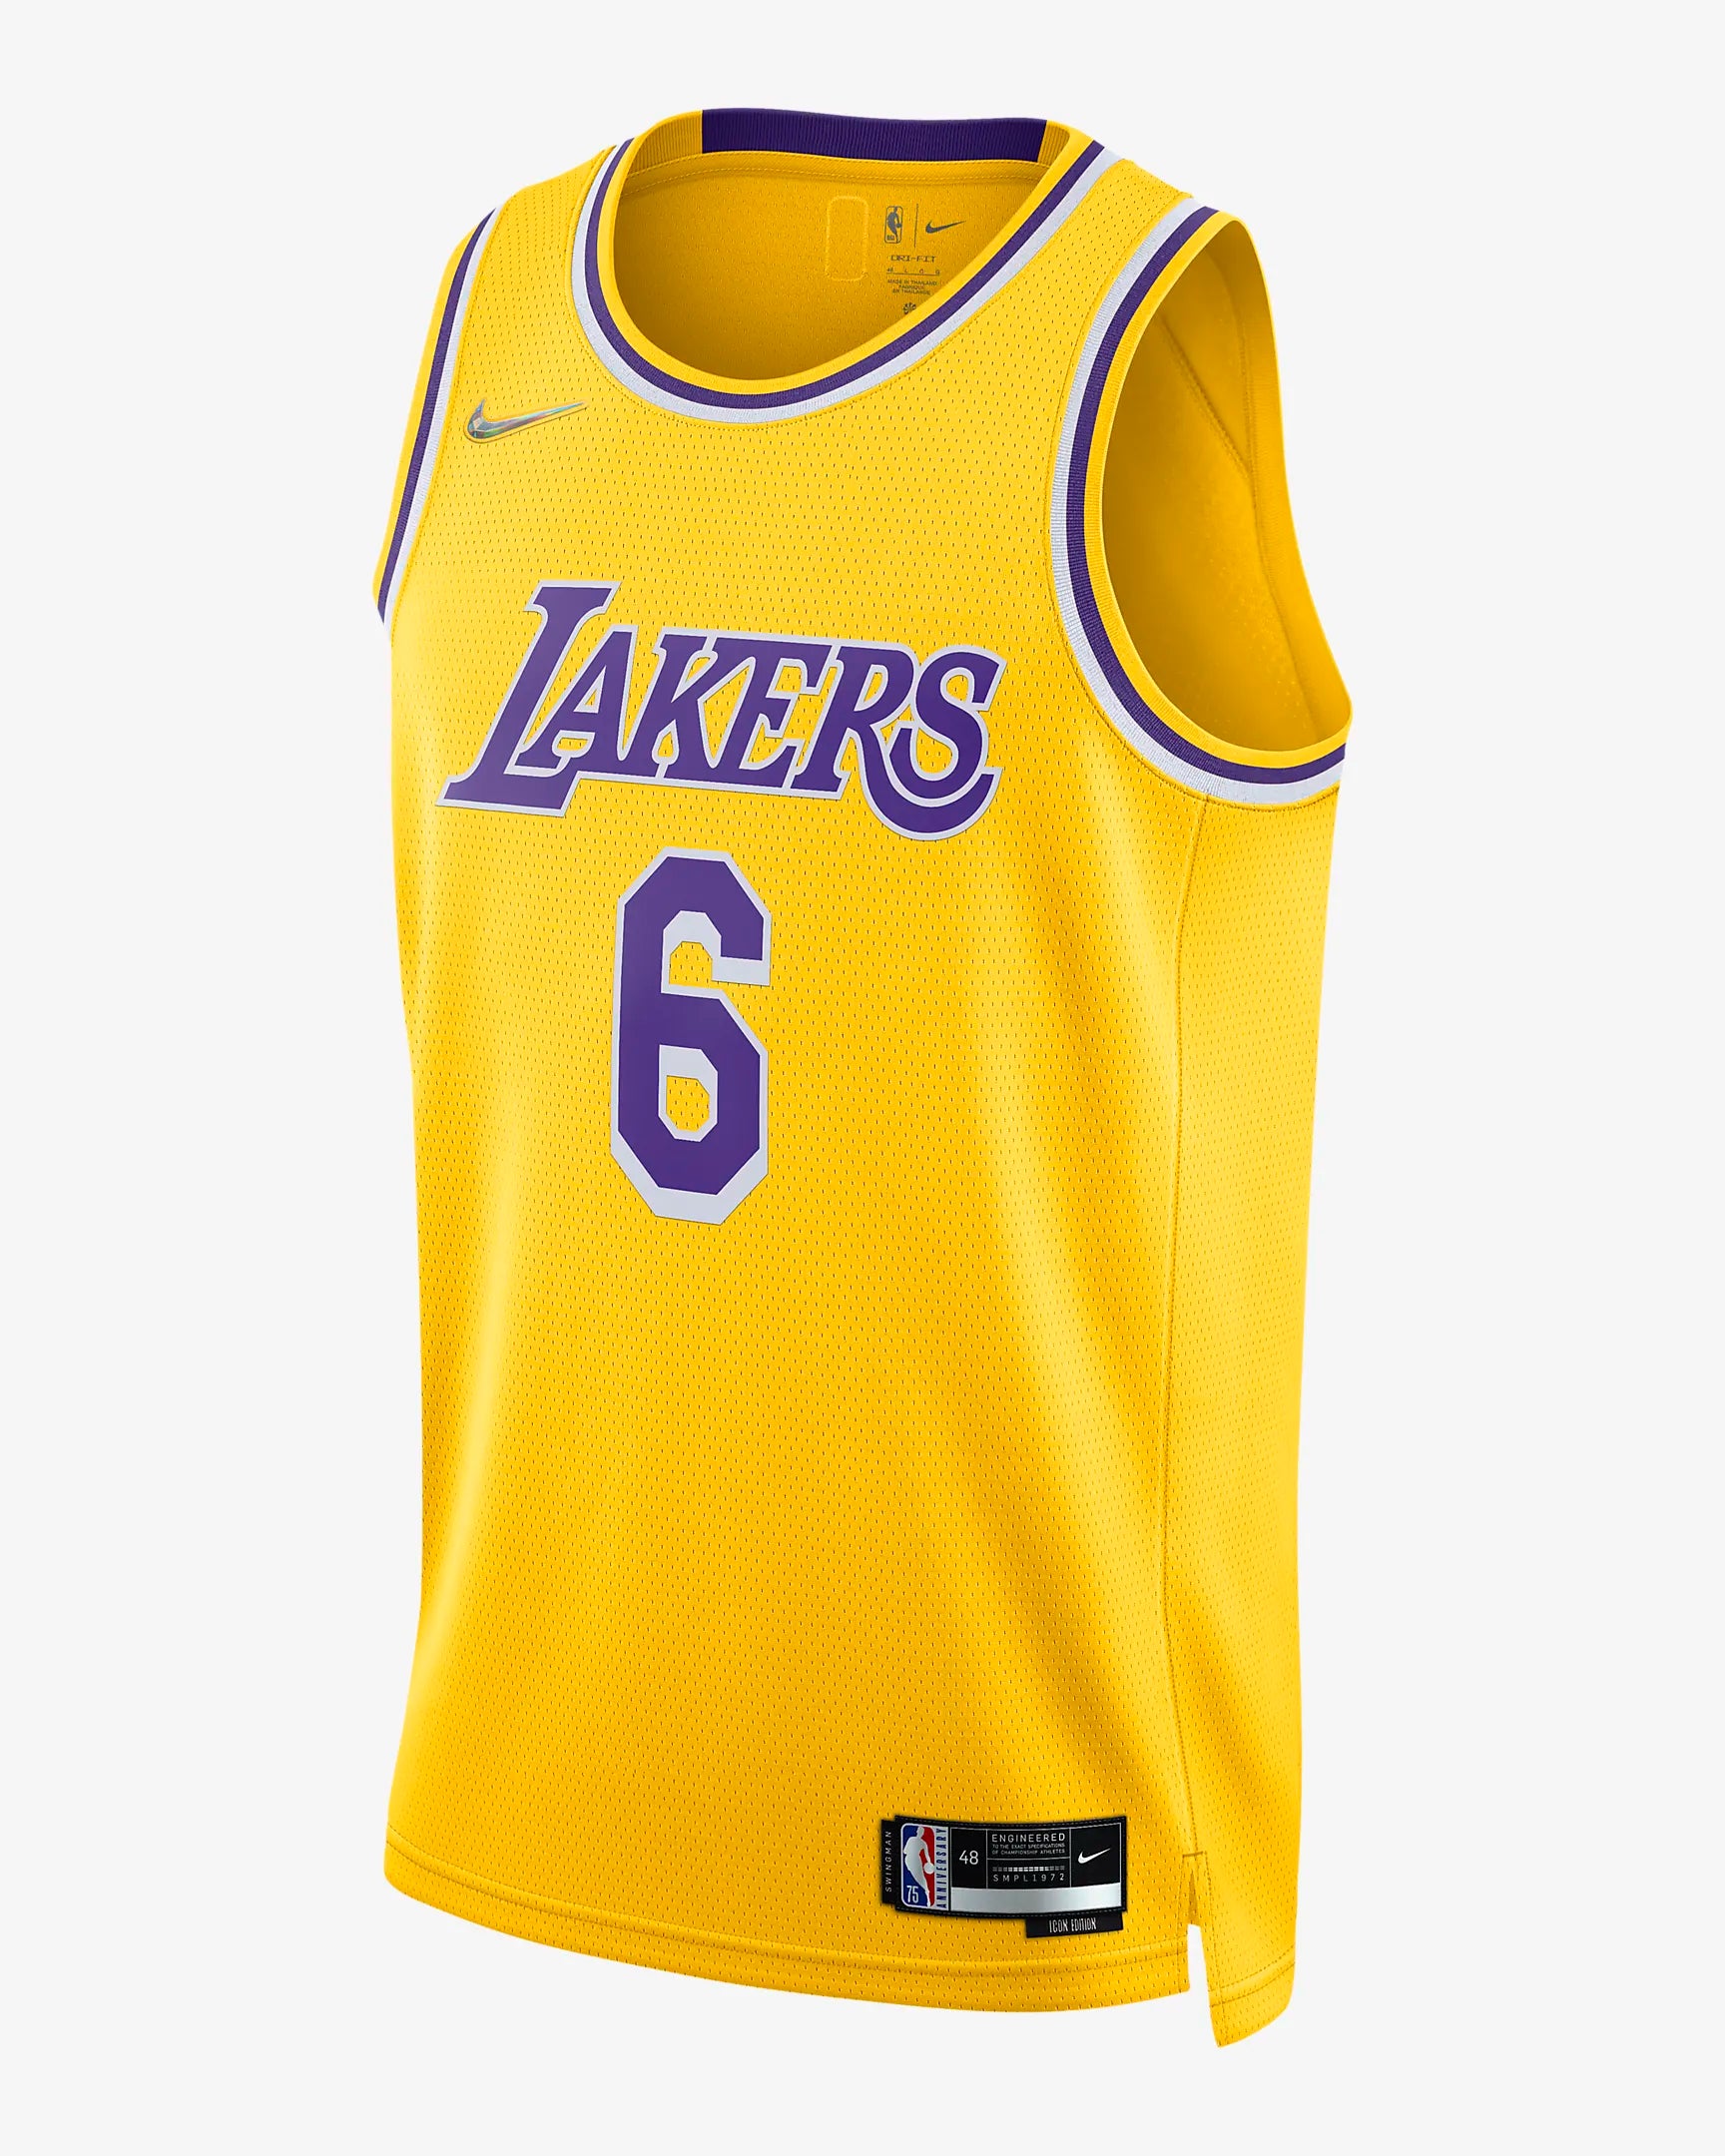 Mini-panier Mini-Hoop NBA LA Lakers